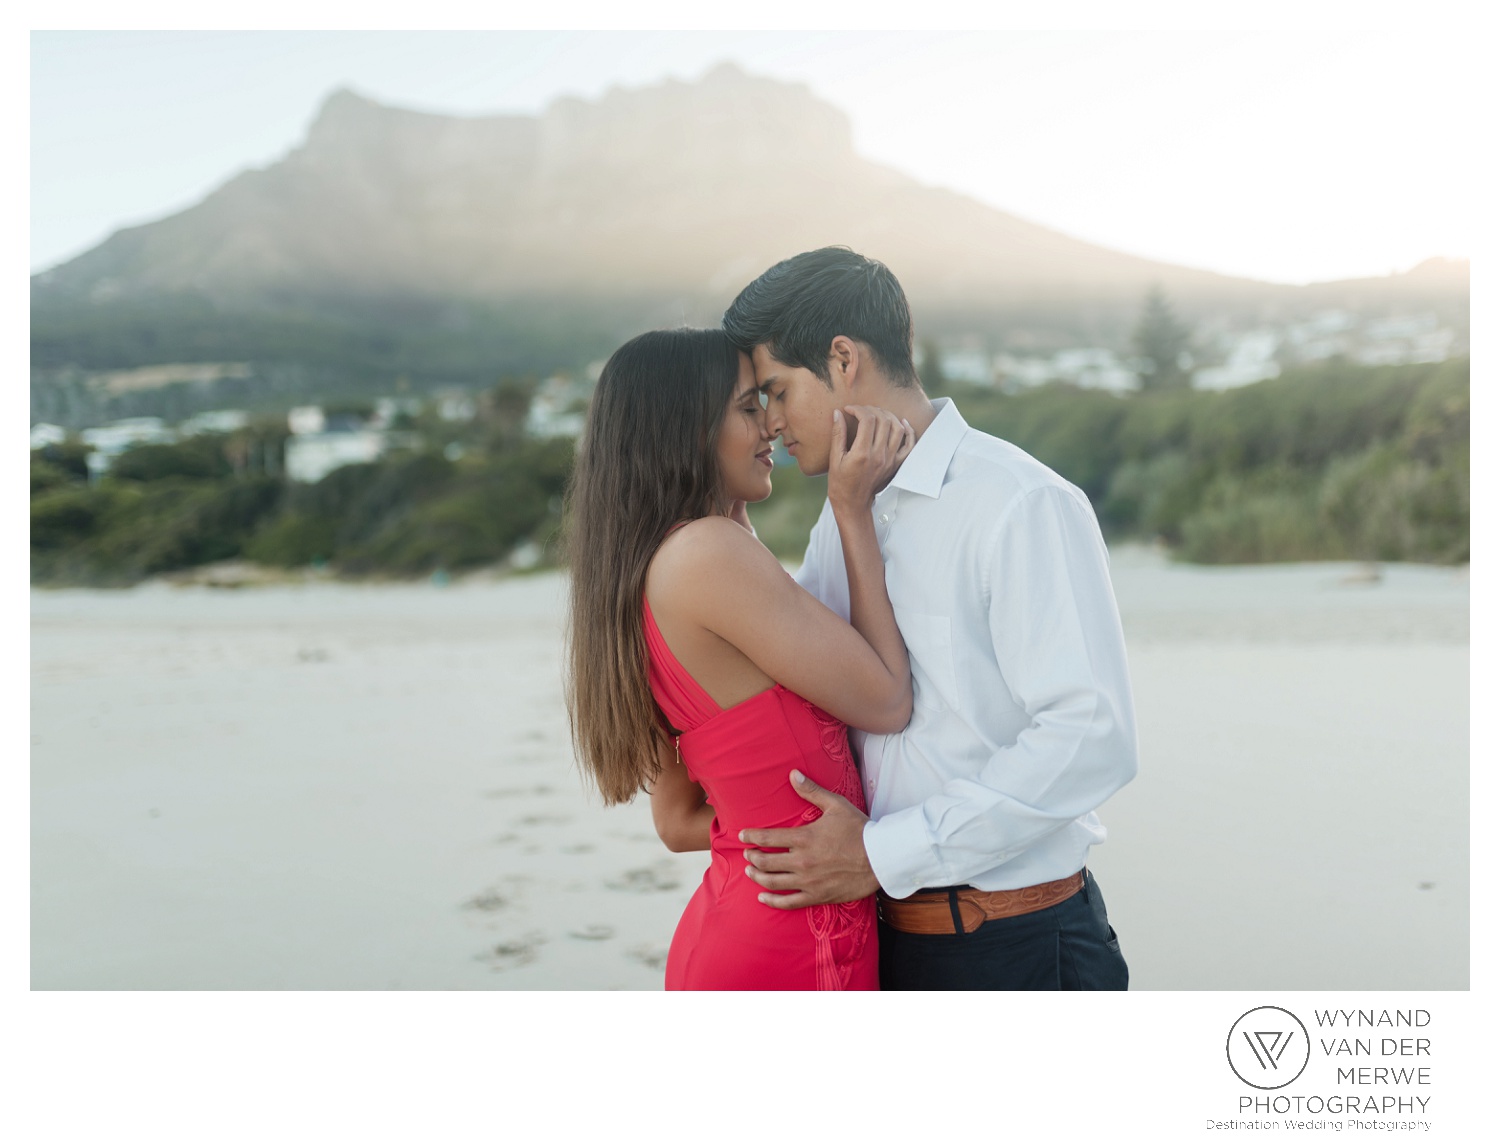 WvdM_engagementshoot_engaged_couple_prewedding_llandudno_cliftonbeach_beach_formal_southafrica_weddingphotographer_greernicolas-32.jpg